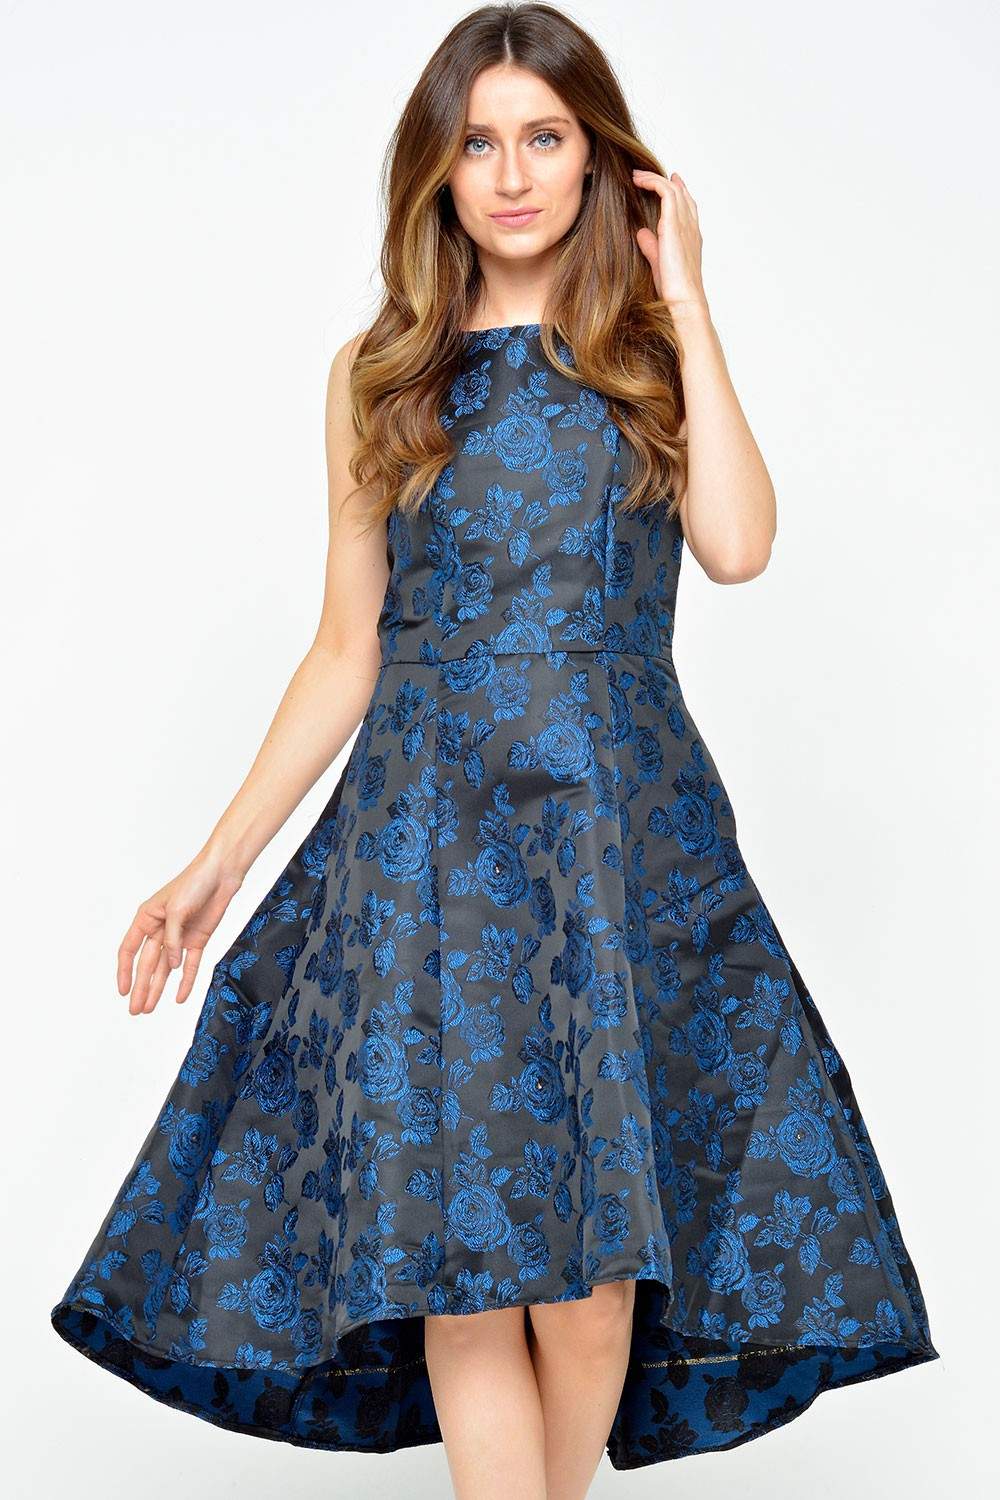 Marc Angelo Sally Brocade Dress in Royal Blue | iCLOTHING